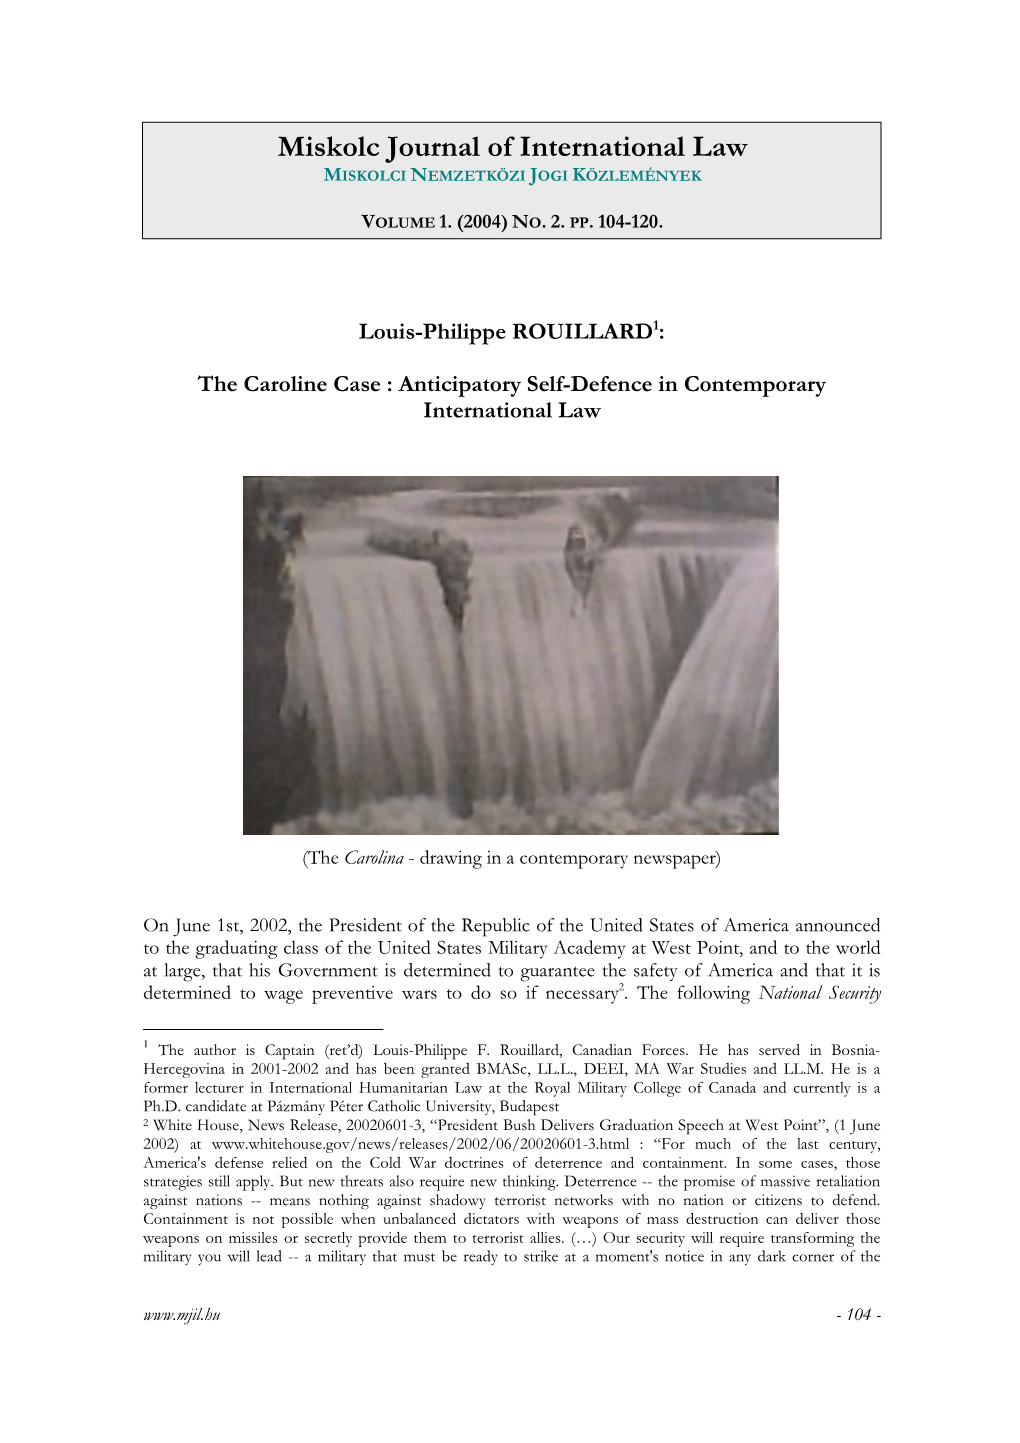 Miskolc Journal of International Law Louis-Philippe Rouillard: Miskolc Journal of International Law the Caroline Case… MISKOLCI NEMZETKÖZI JOGI KÖZLEMÉNYEK